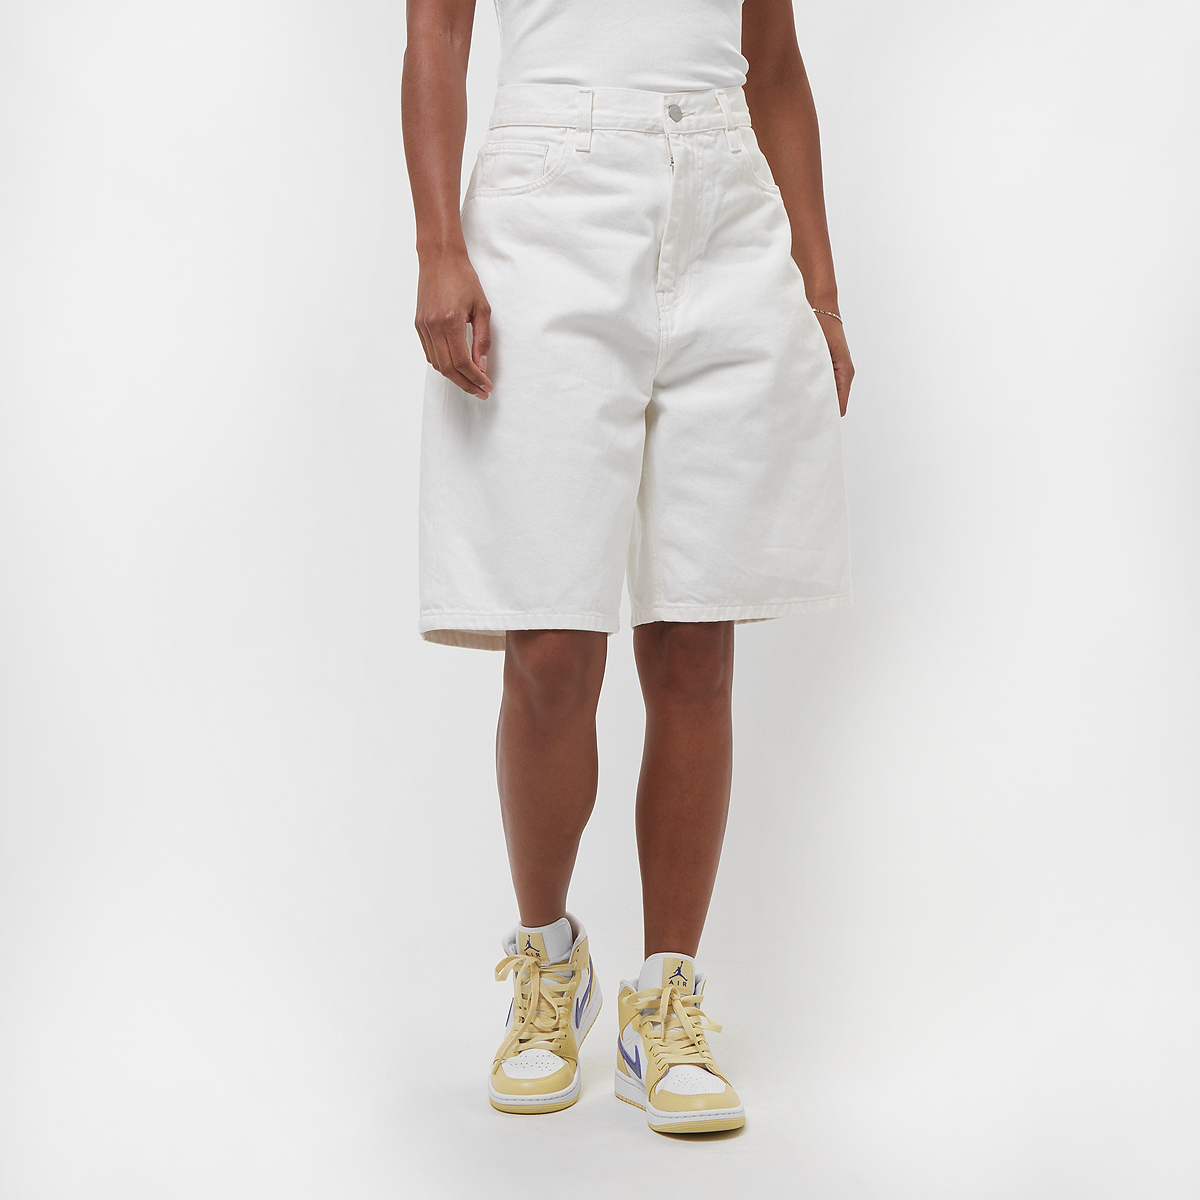 carhartt wip w' brandon short, shorts en jean, vêtements, rinsed white, taille: s, tailles disponibles:xs,s,m,l